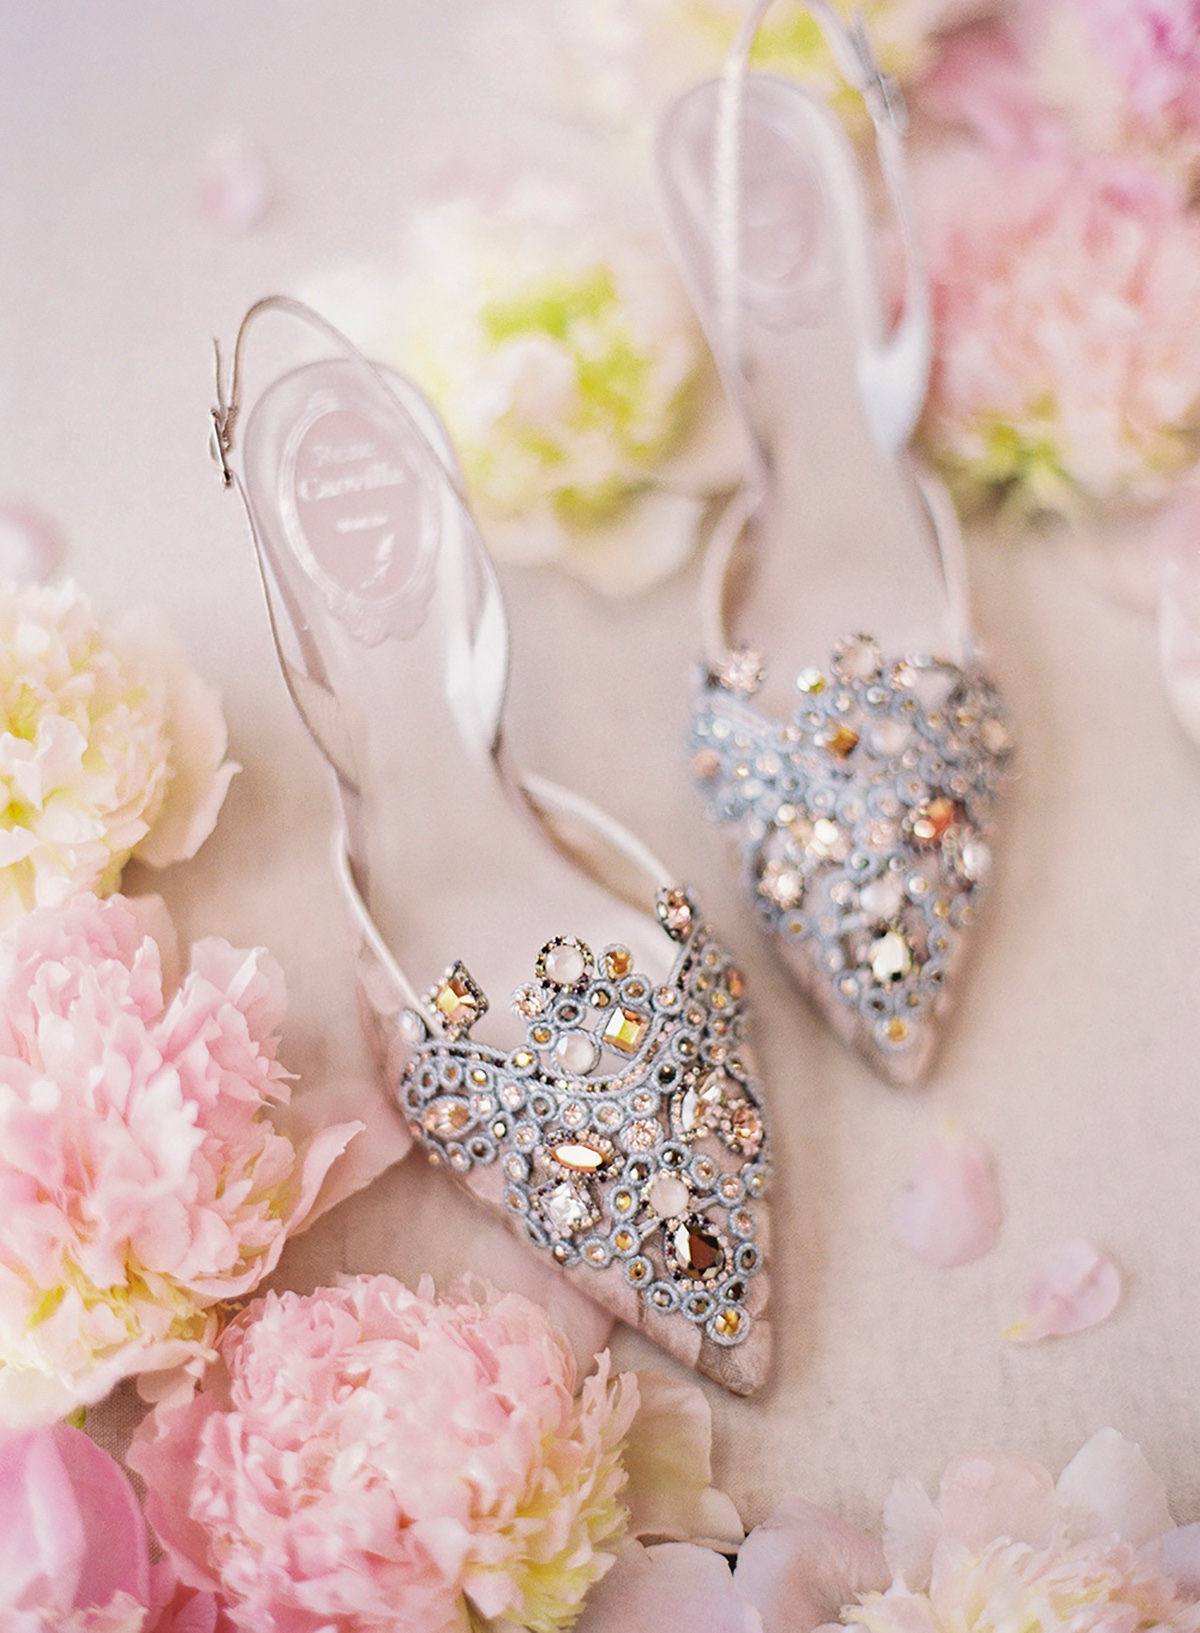 Rock studded wedding heels